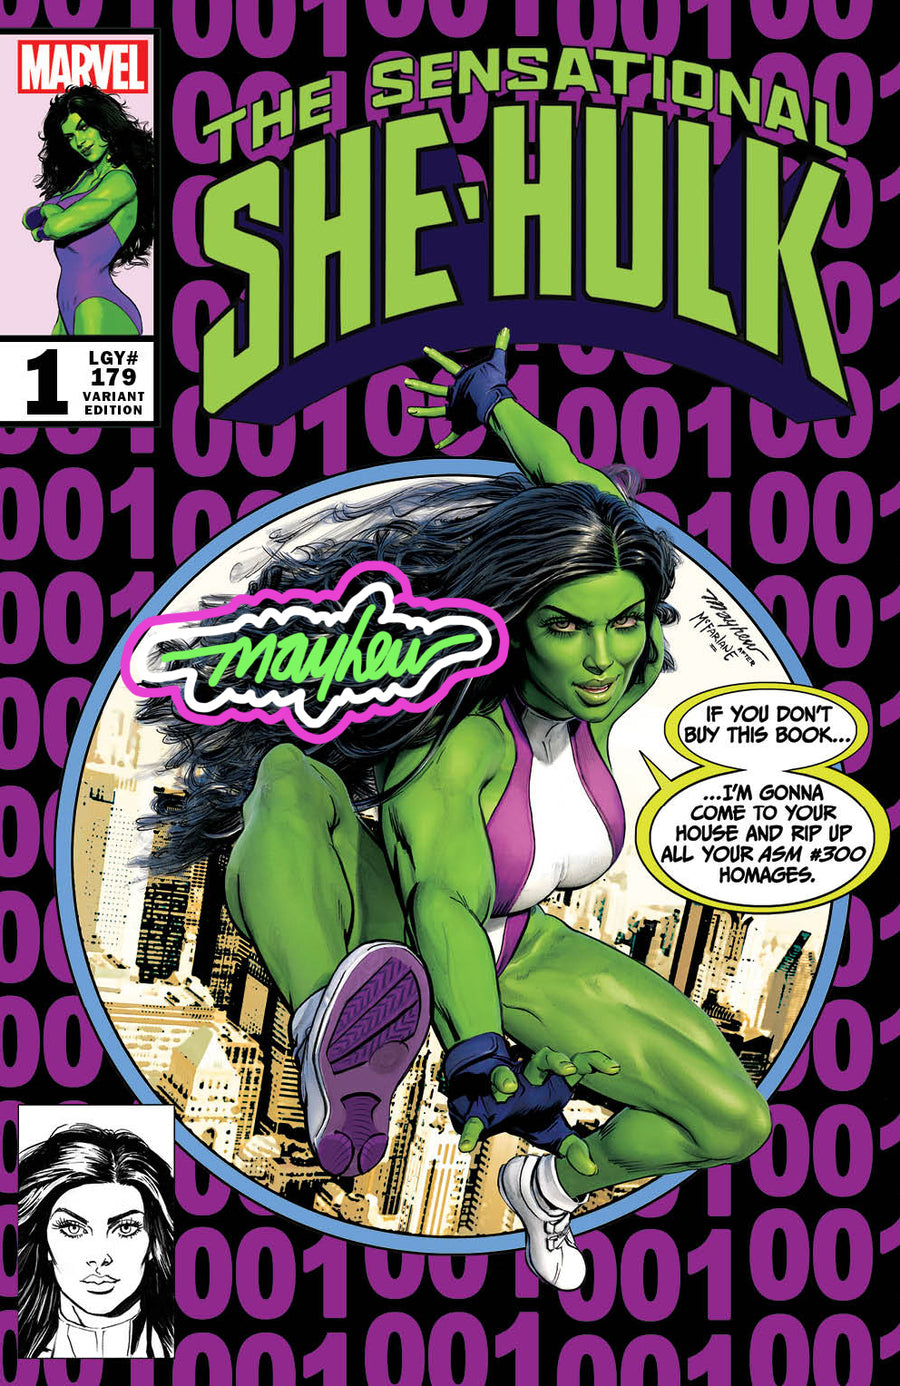 THE SENSATIONAL SHE-HULK #1 Mike Mayhew Studio Variant Cover A Trade Dress She-Hulk Glow Sig with COA